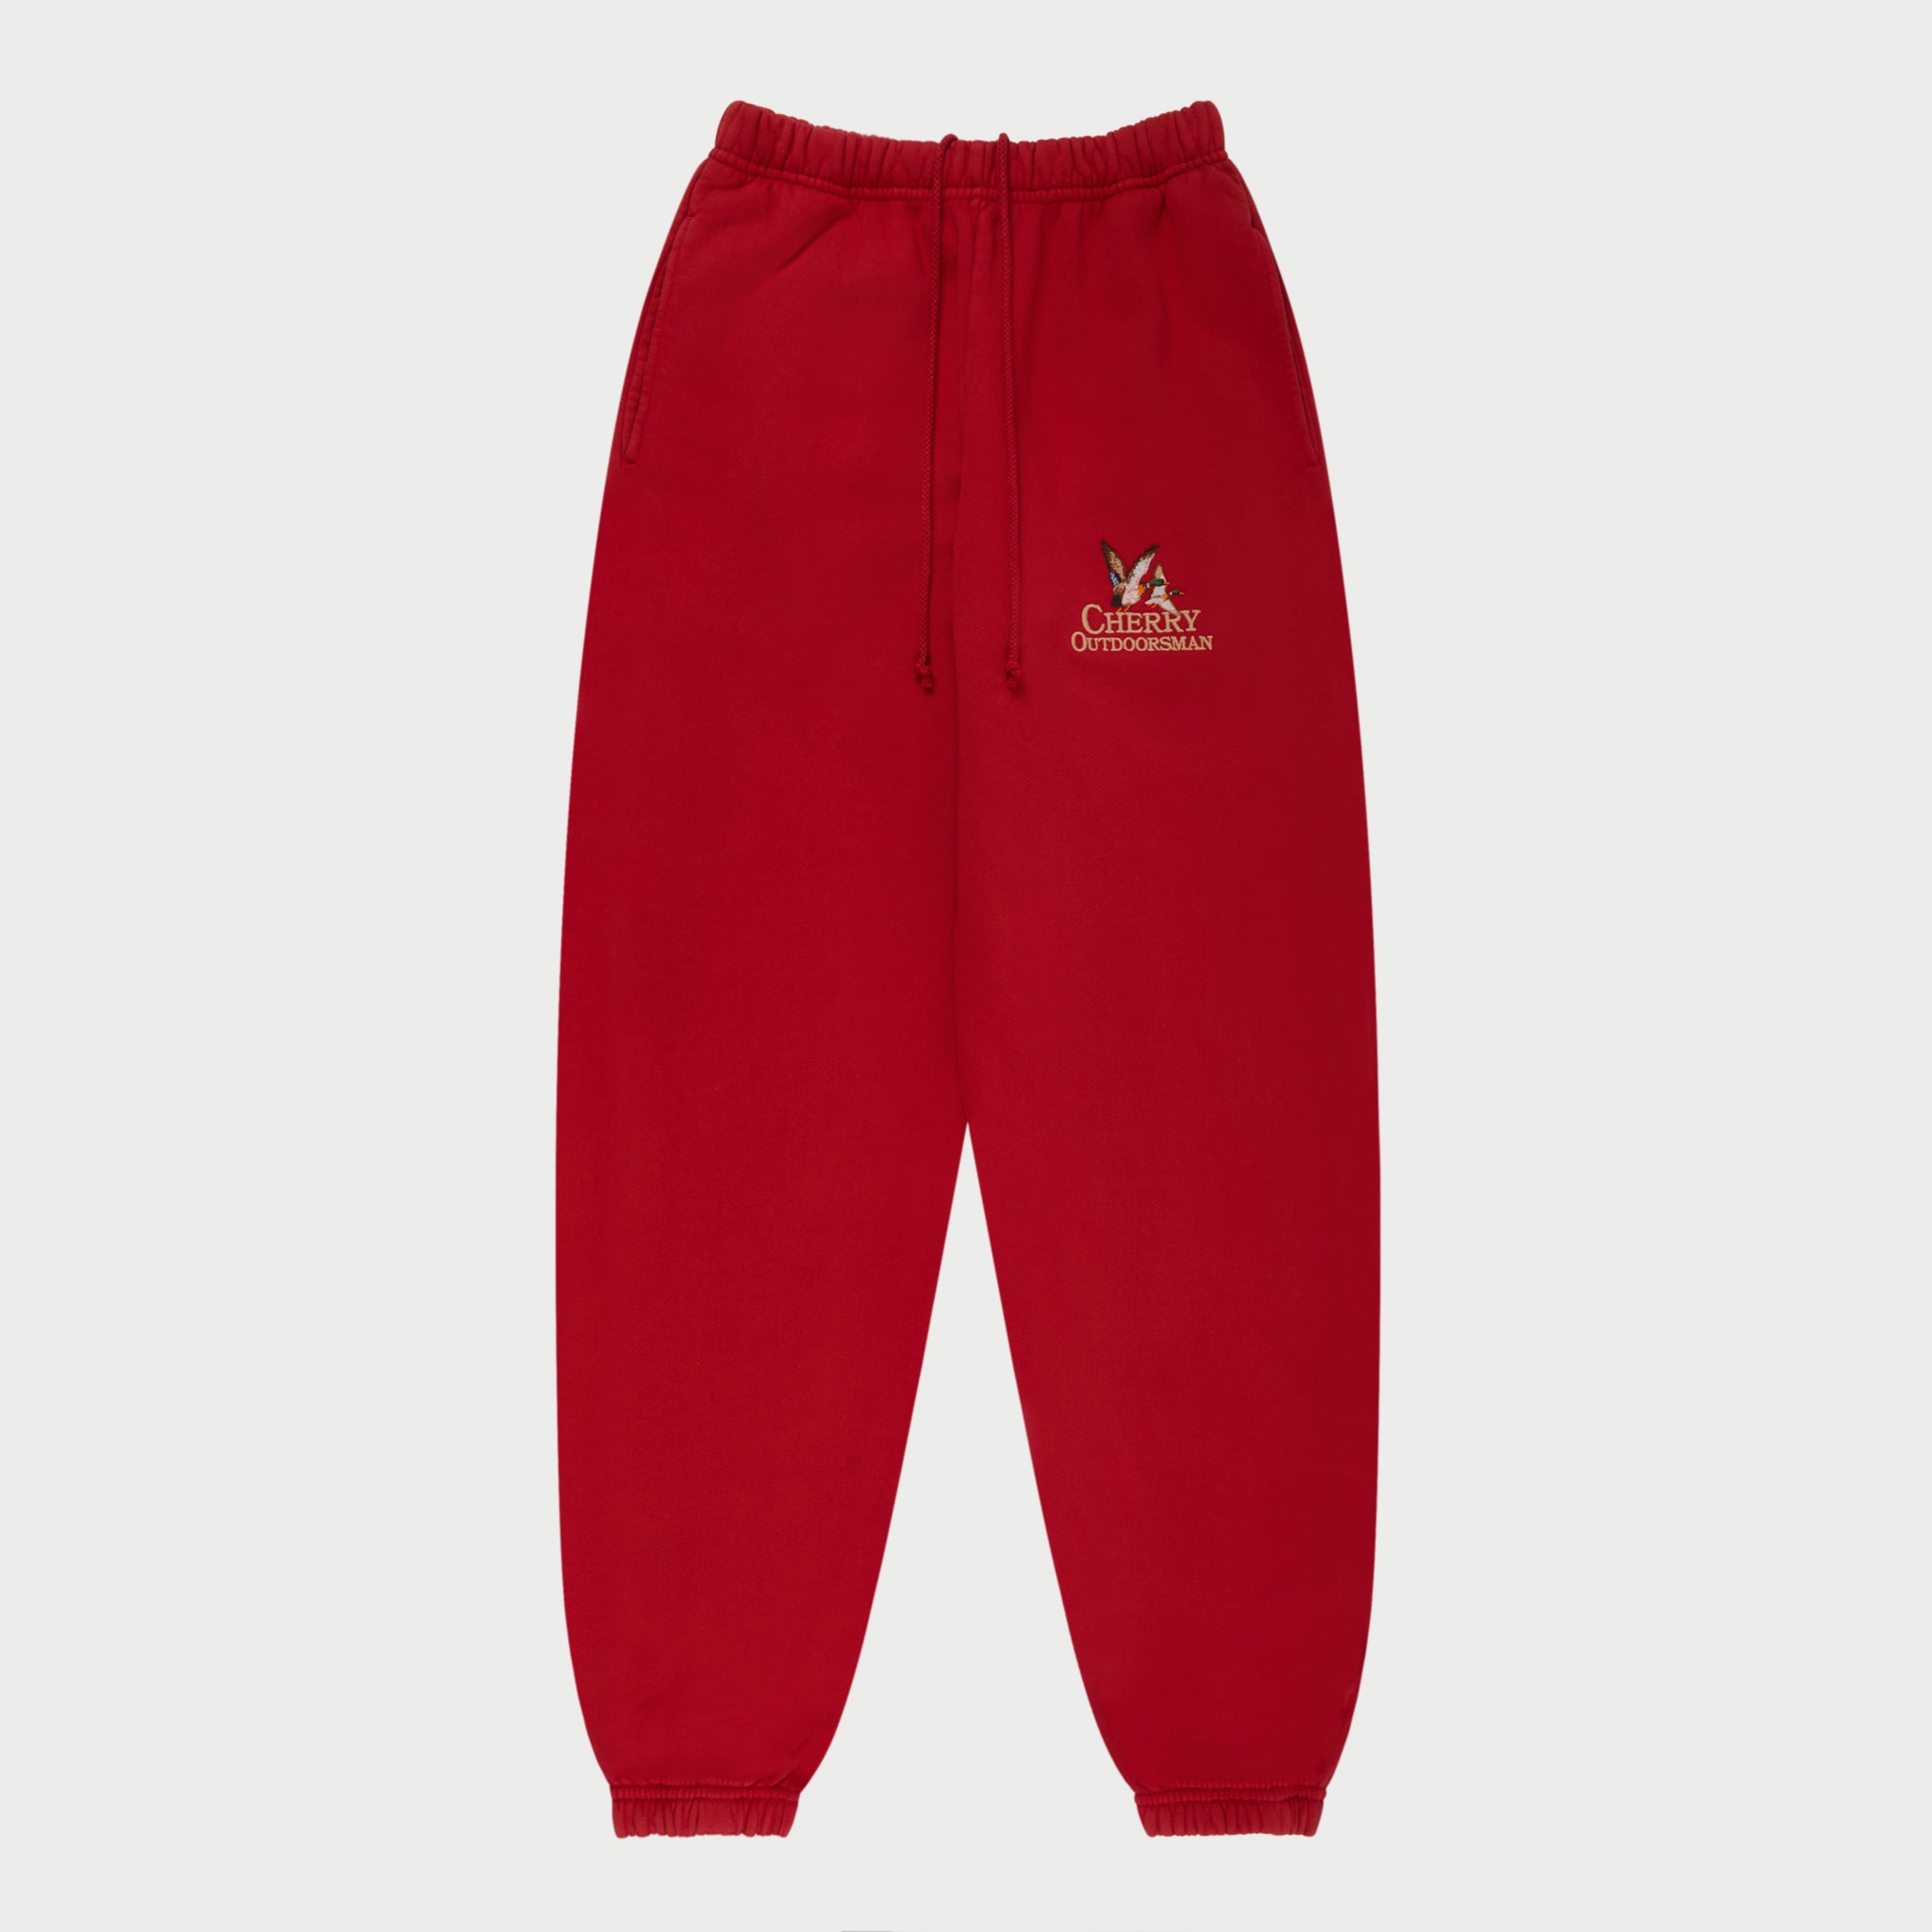 Outdoorsman Sweatpants (Red)